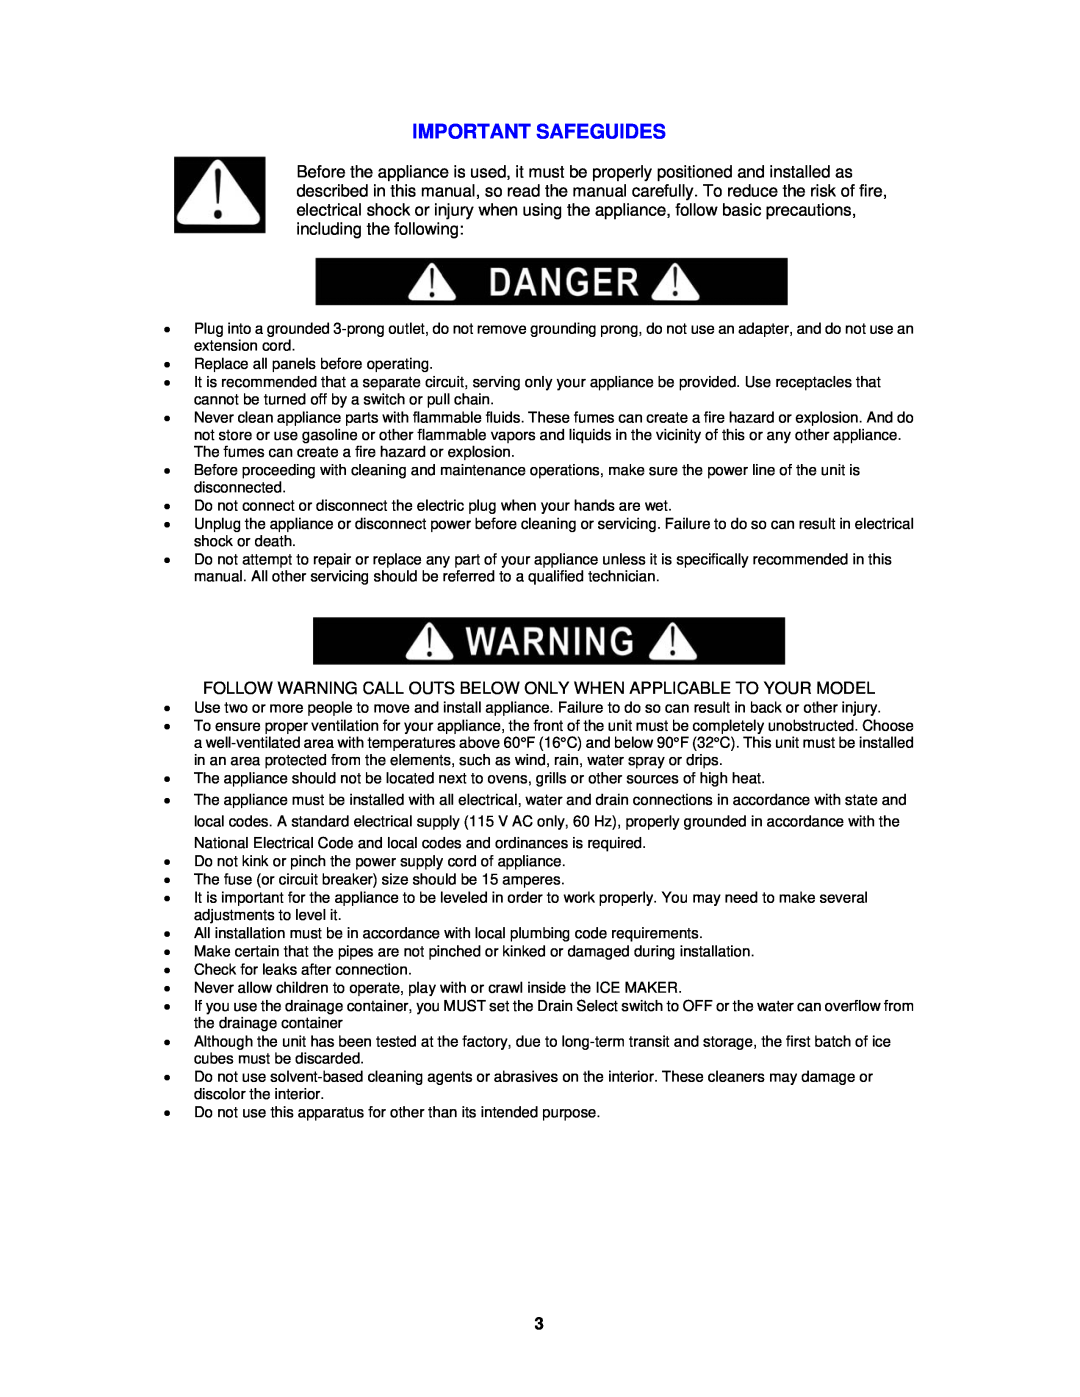 Avanti IMR28SS instruction manual Important Safeguides 